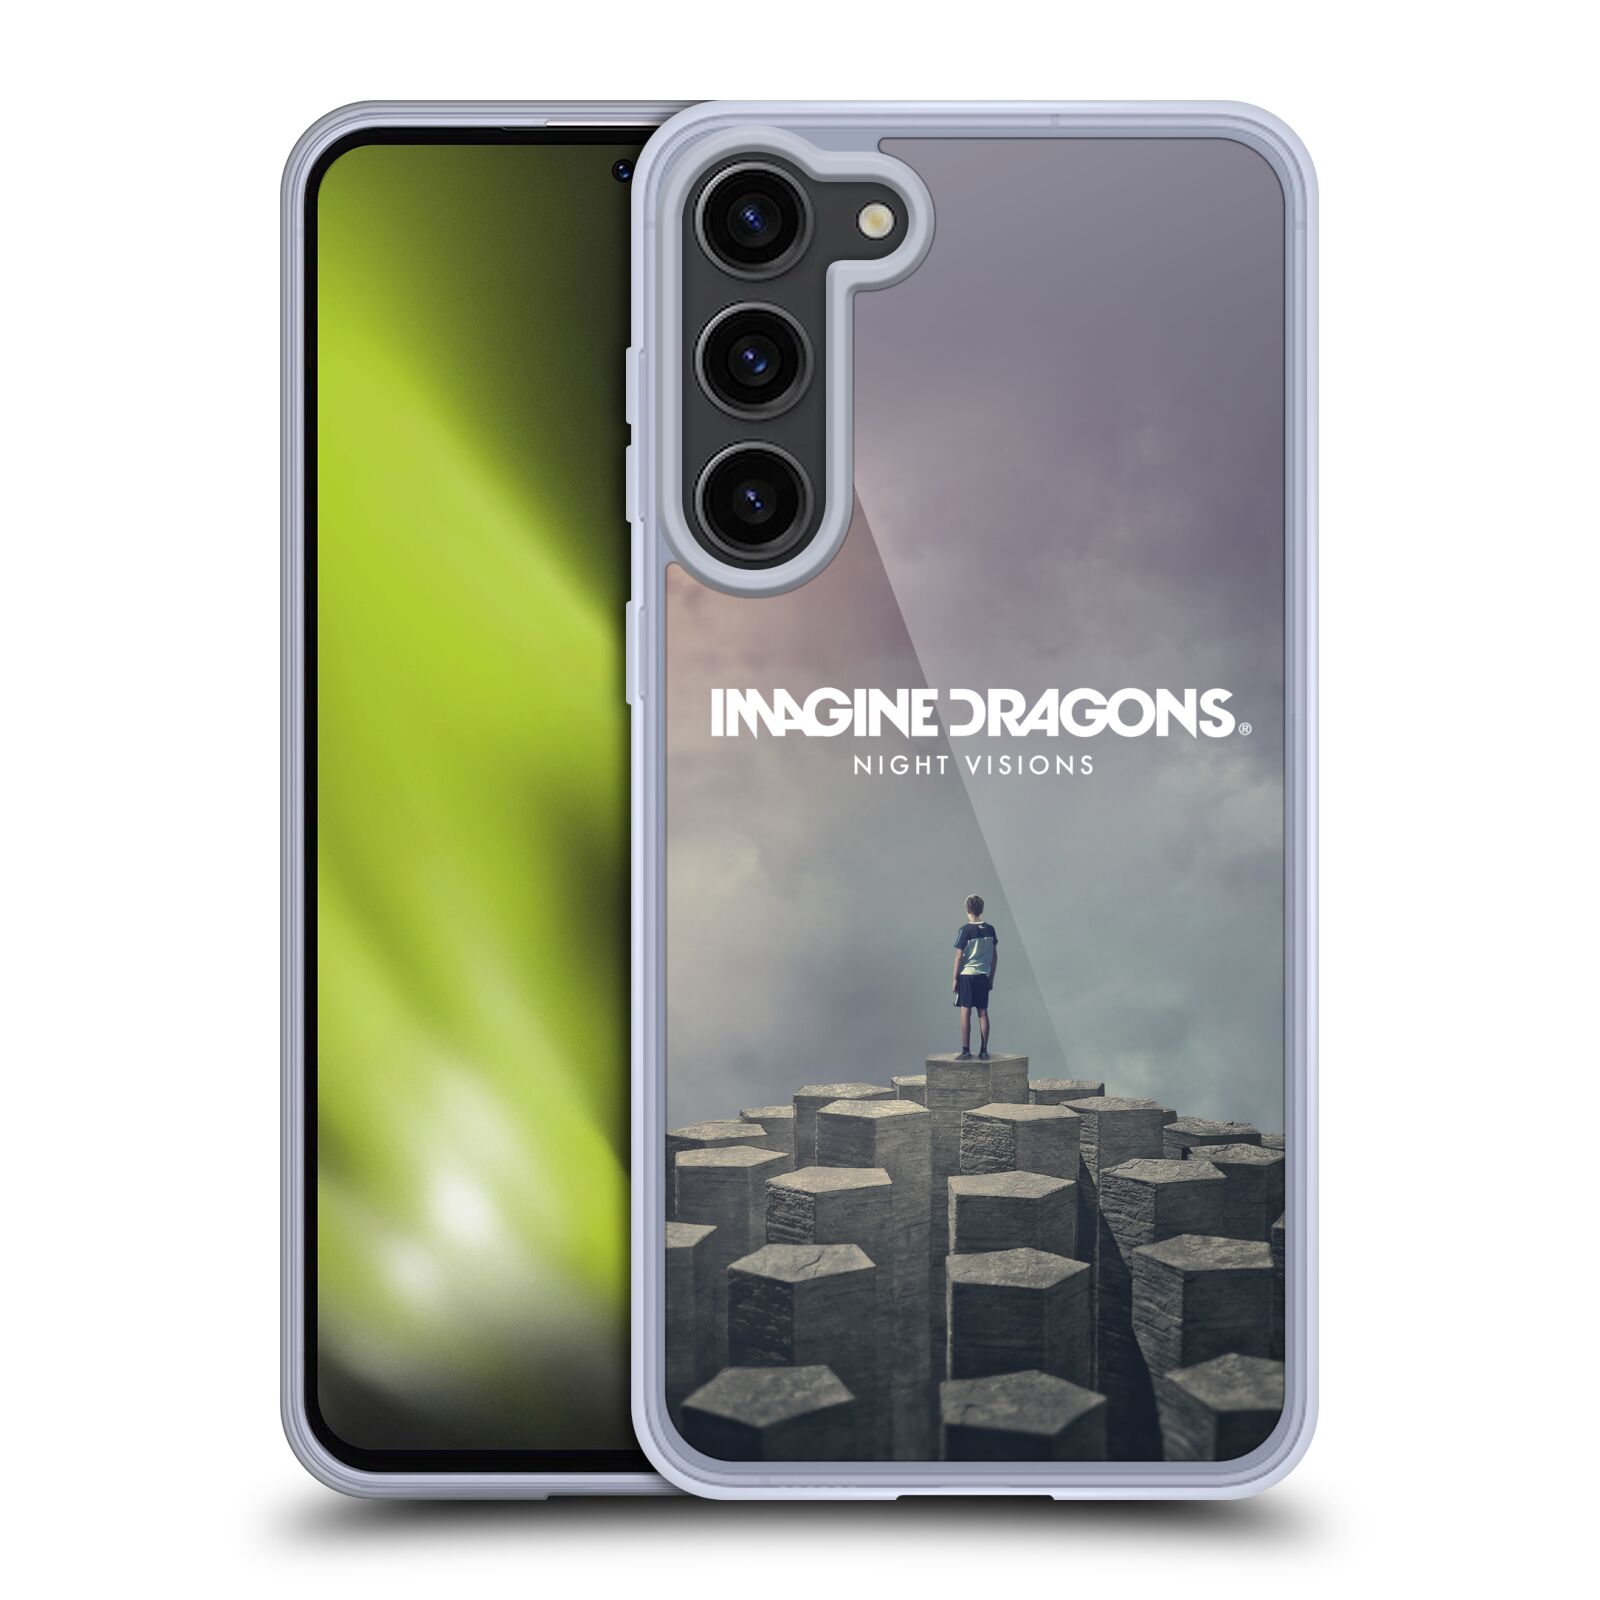 Silikonové pouzdro na mobil Samsung Galaxy S23 Plus - Imagine Dragons - Night Visions (Silikonový kryt, obal, pouzdro na mobilní telefon Samsung Galaxy S23 Plus s licencovaným motivem Imagine Dragons - Night Visions)